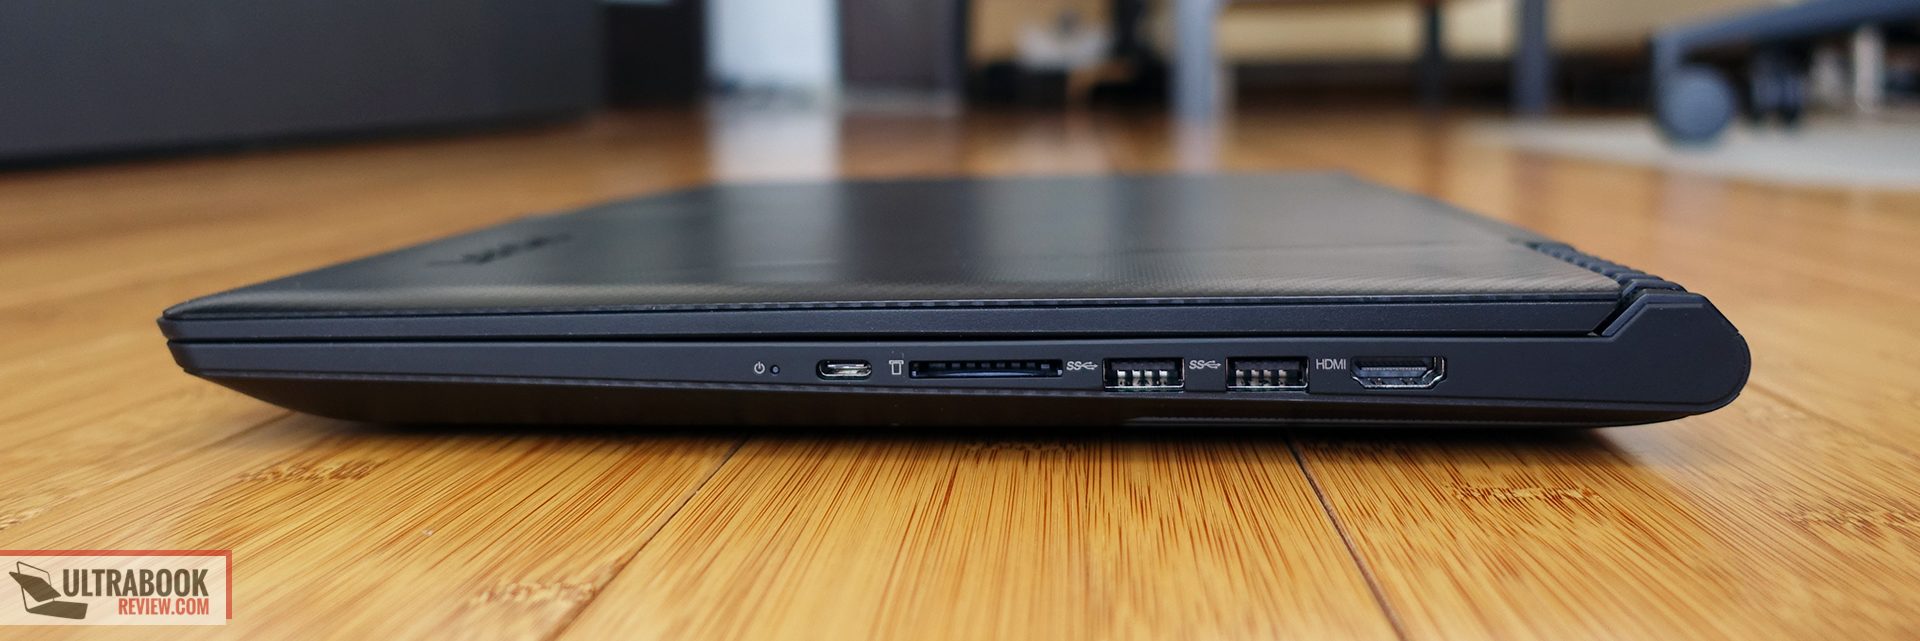 Lenovo Legion Y520 review - laptop at $900